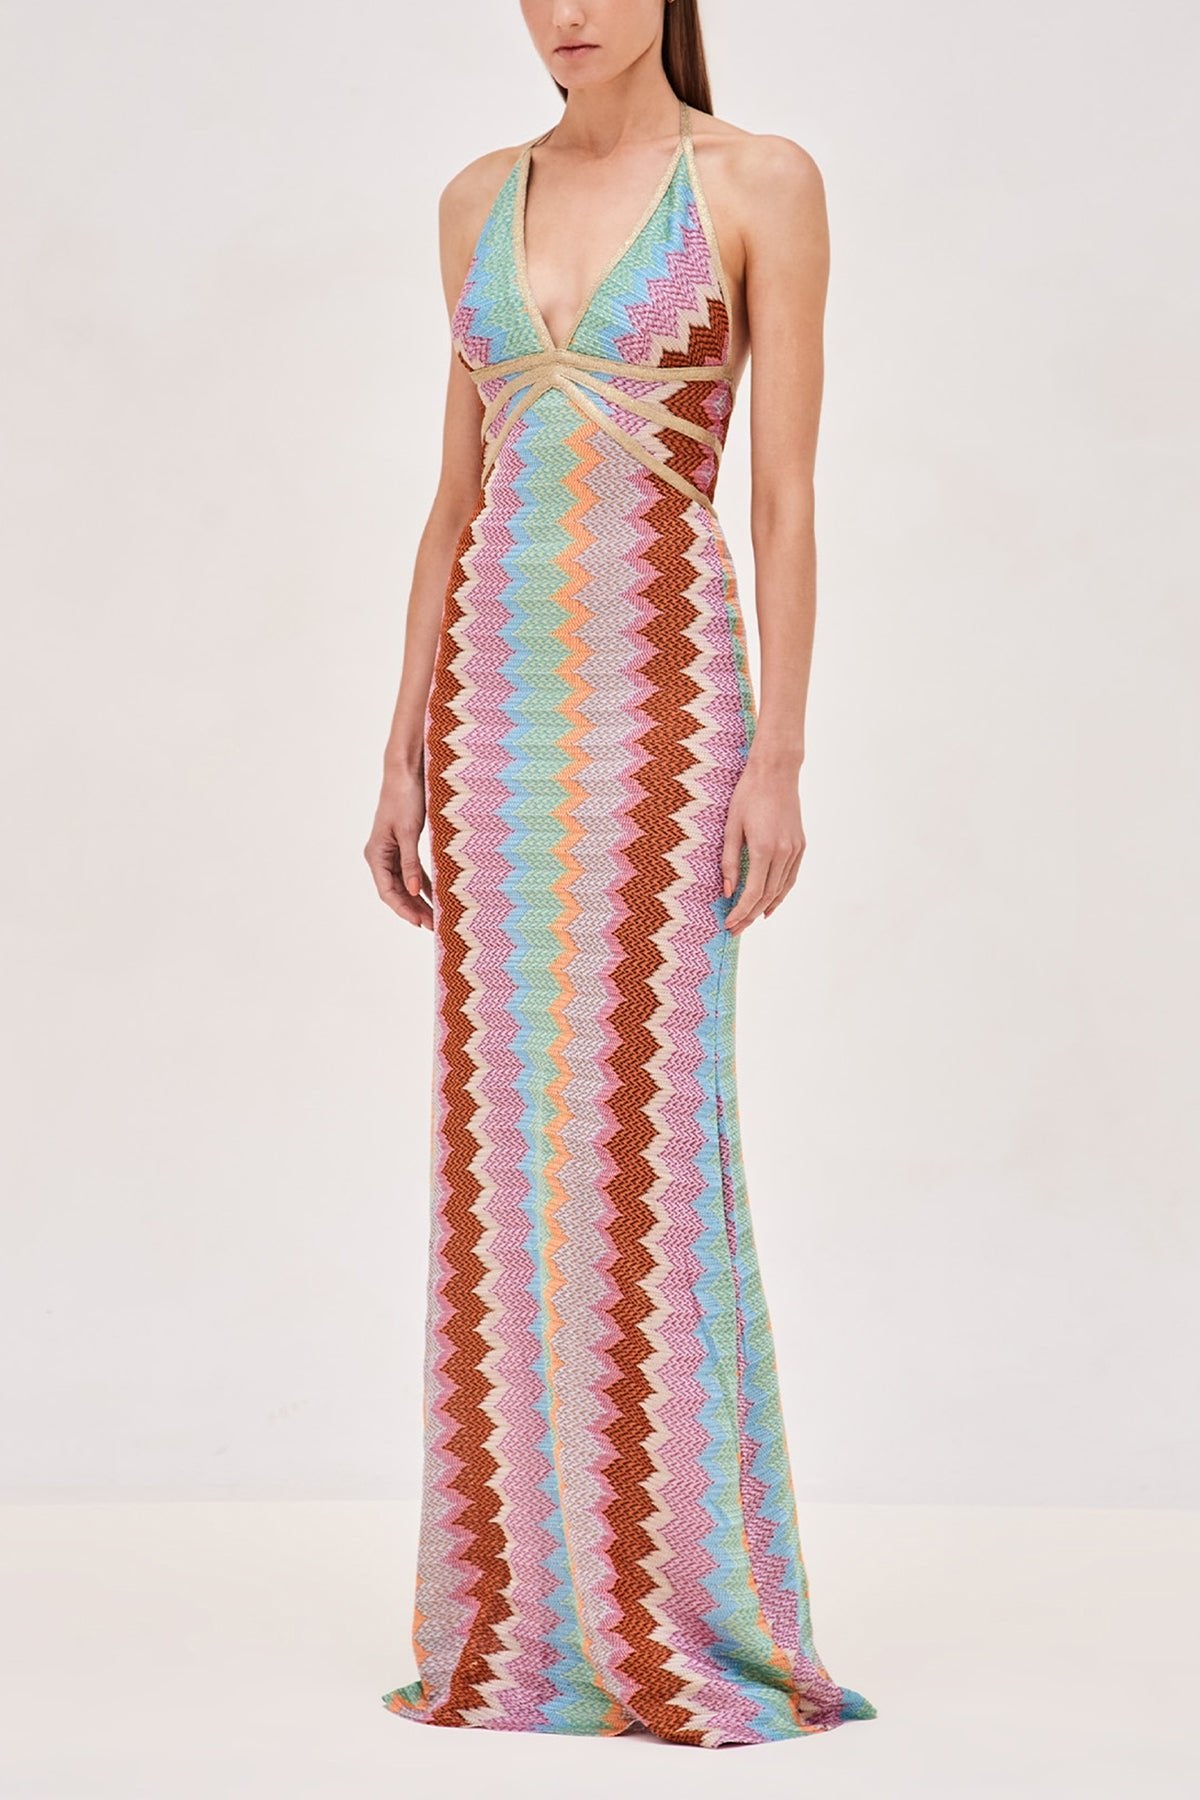 Enna Maxi Dress in Multicolor - shop-olivia.com